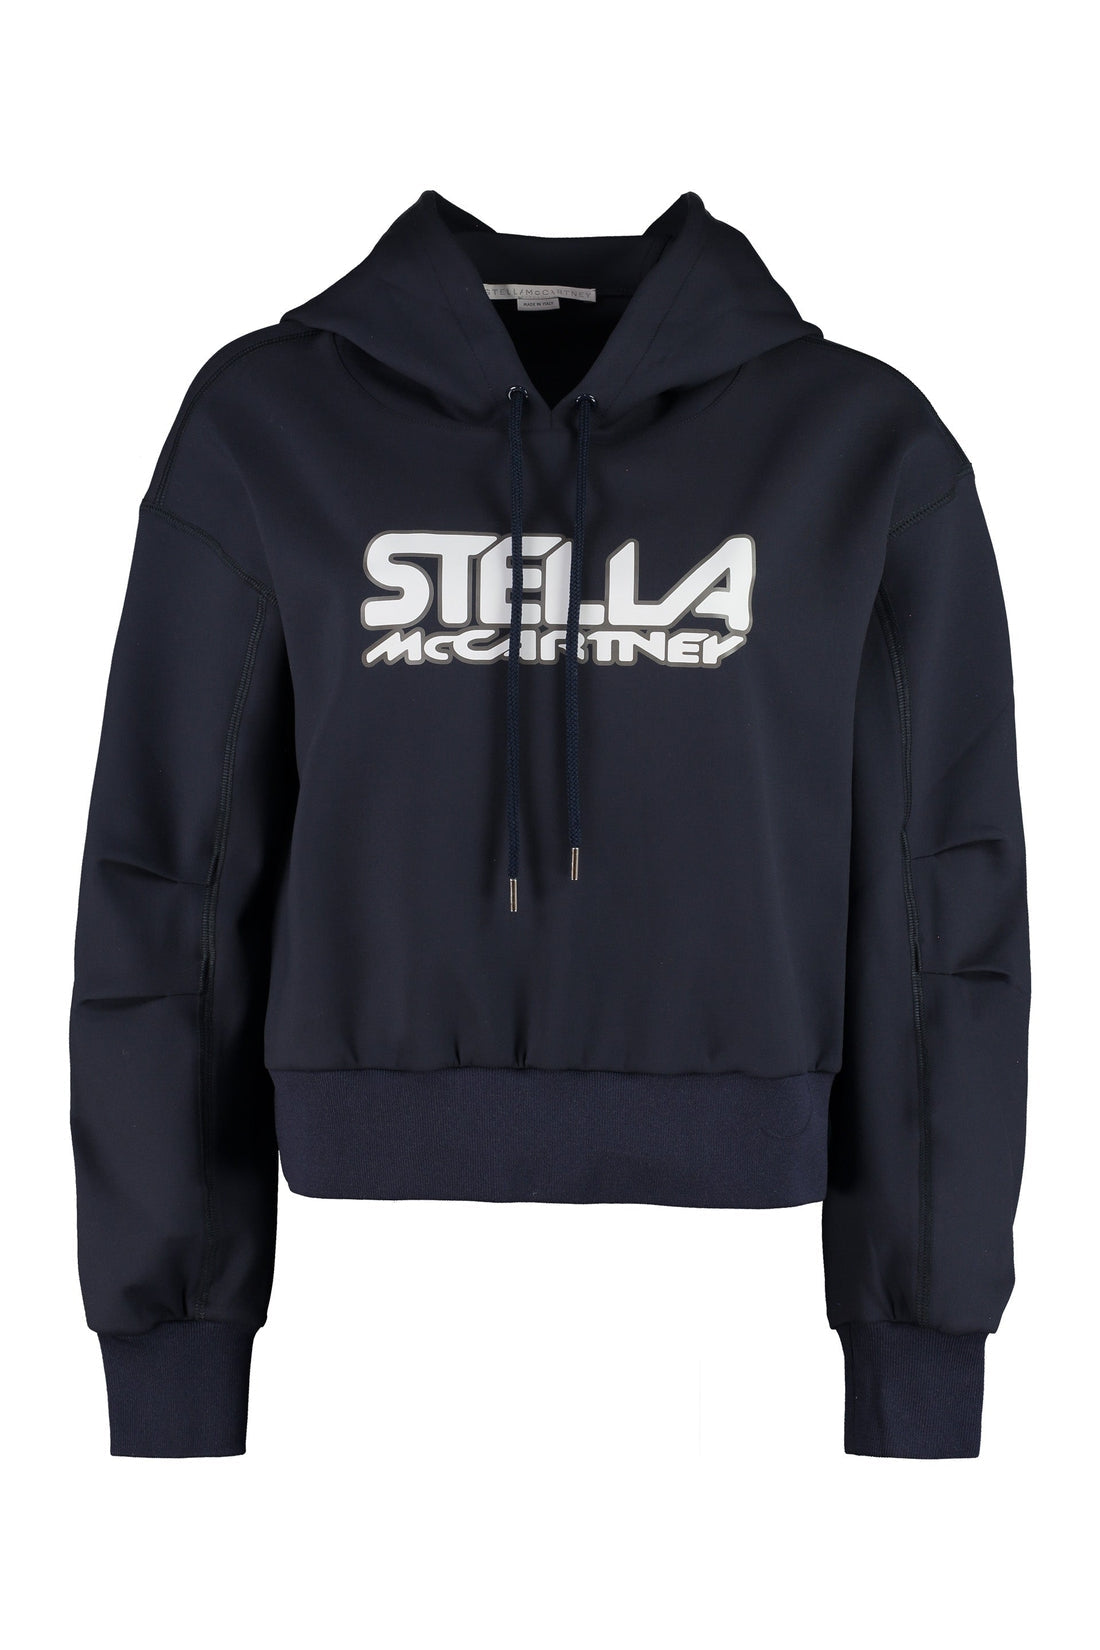 Stella McCartney-OUTLET-SALE-Cropped printed sweatshirt-ARCHIVIST